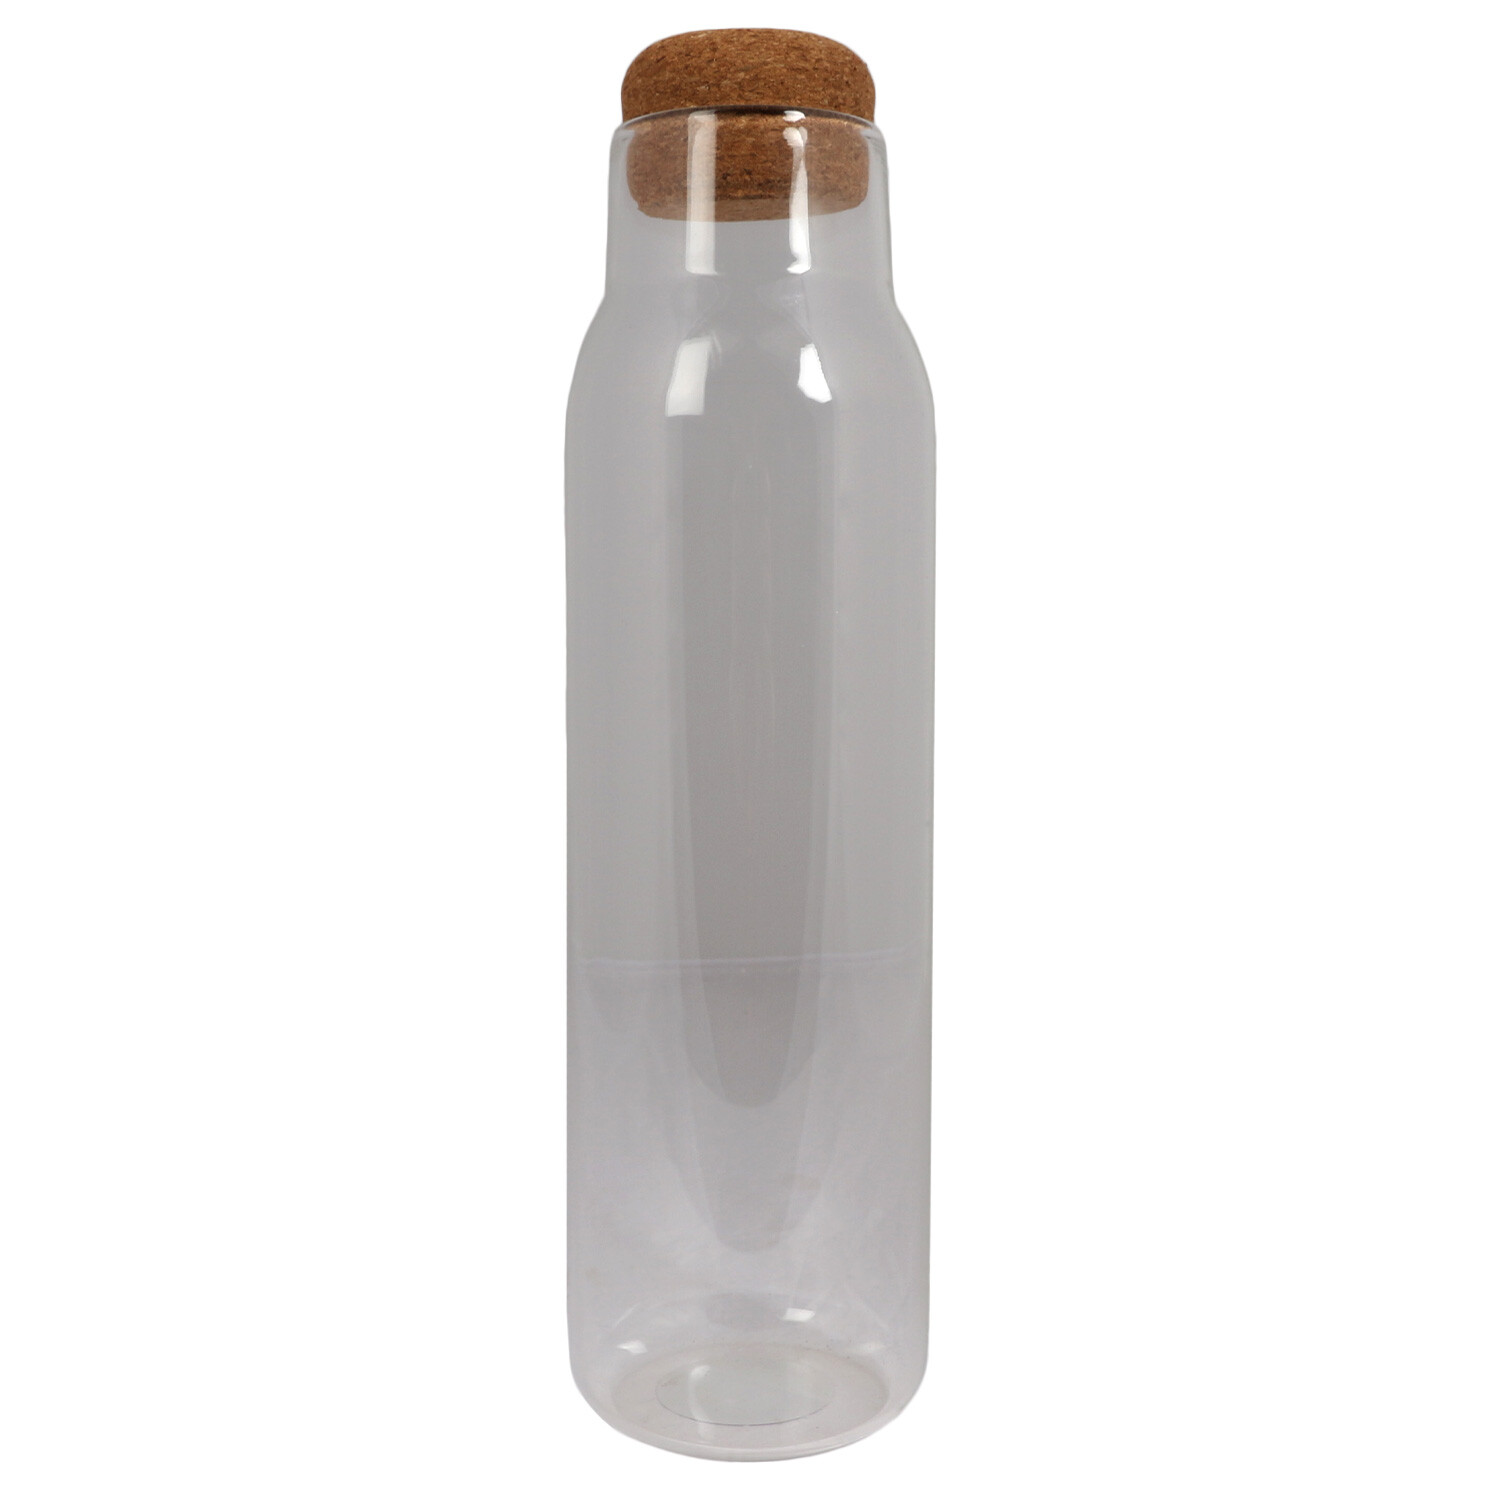 Storage Jar with Cork Lid - Clear Image